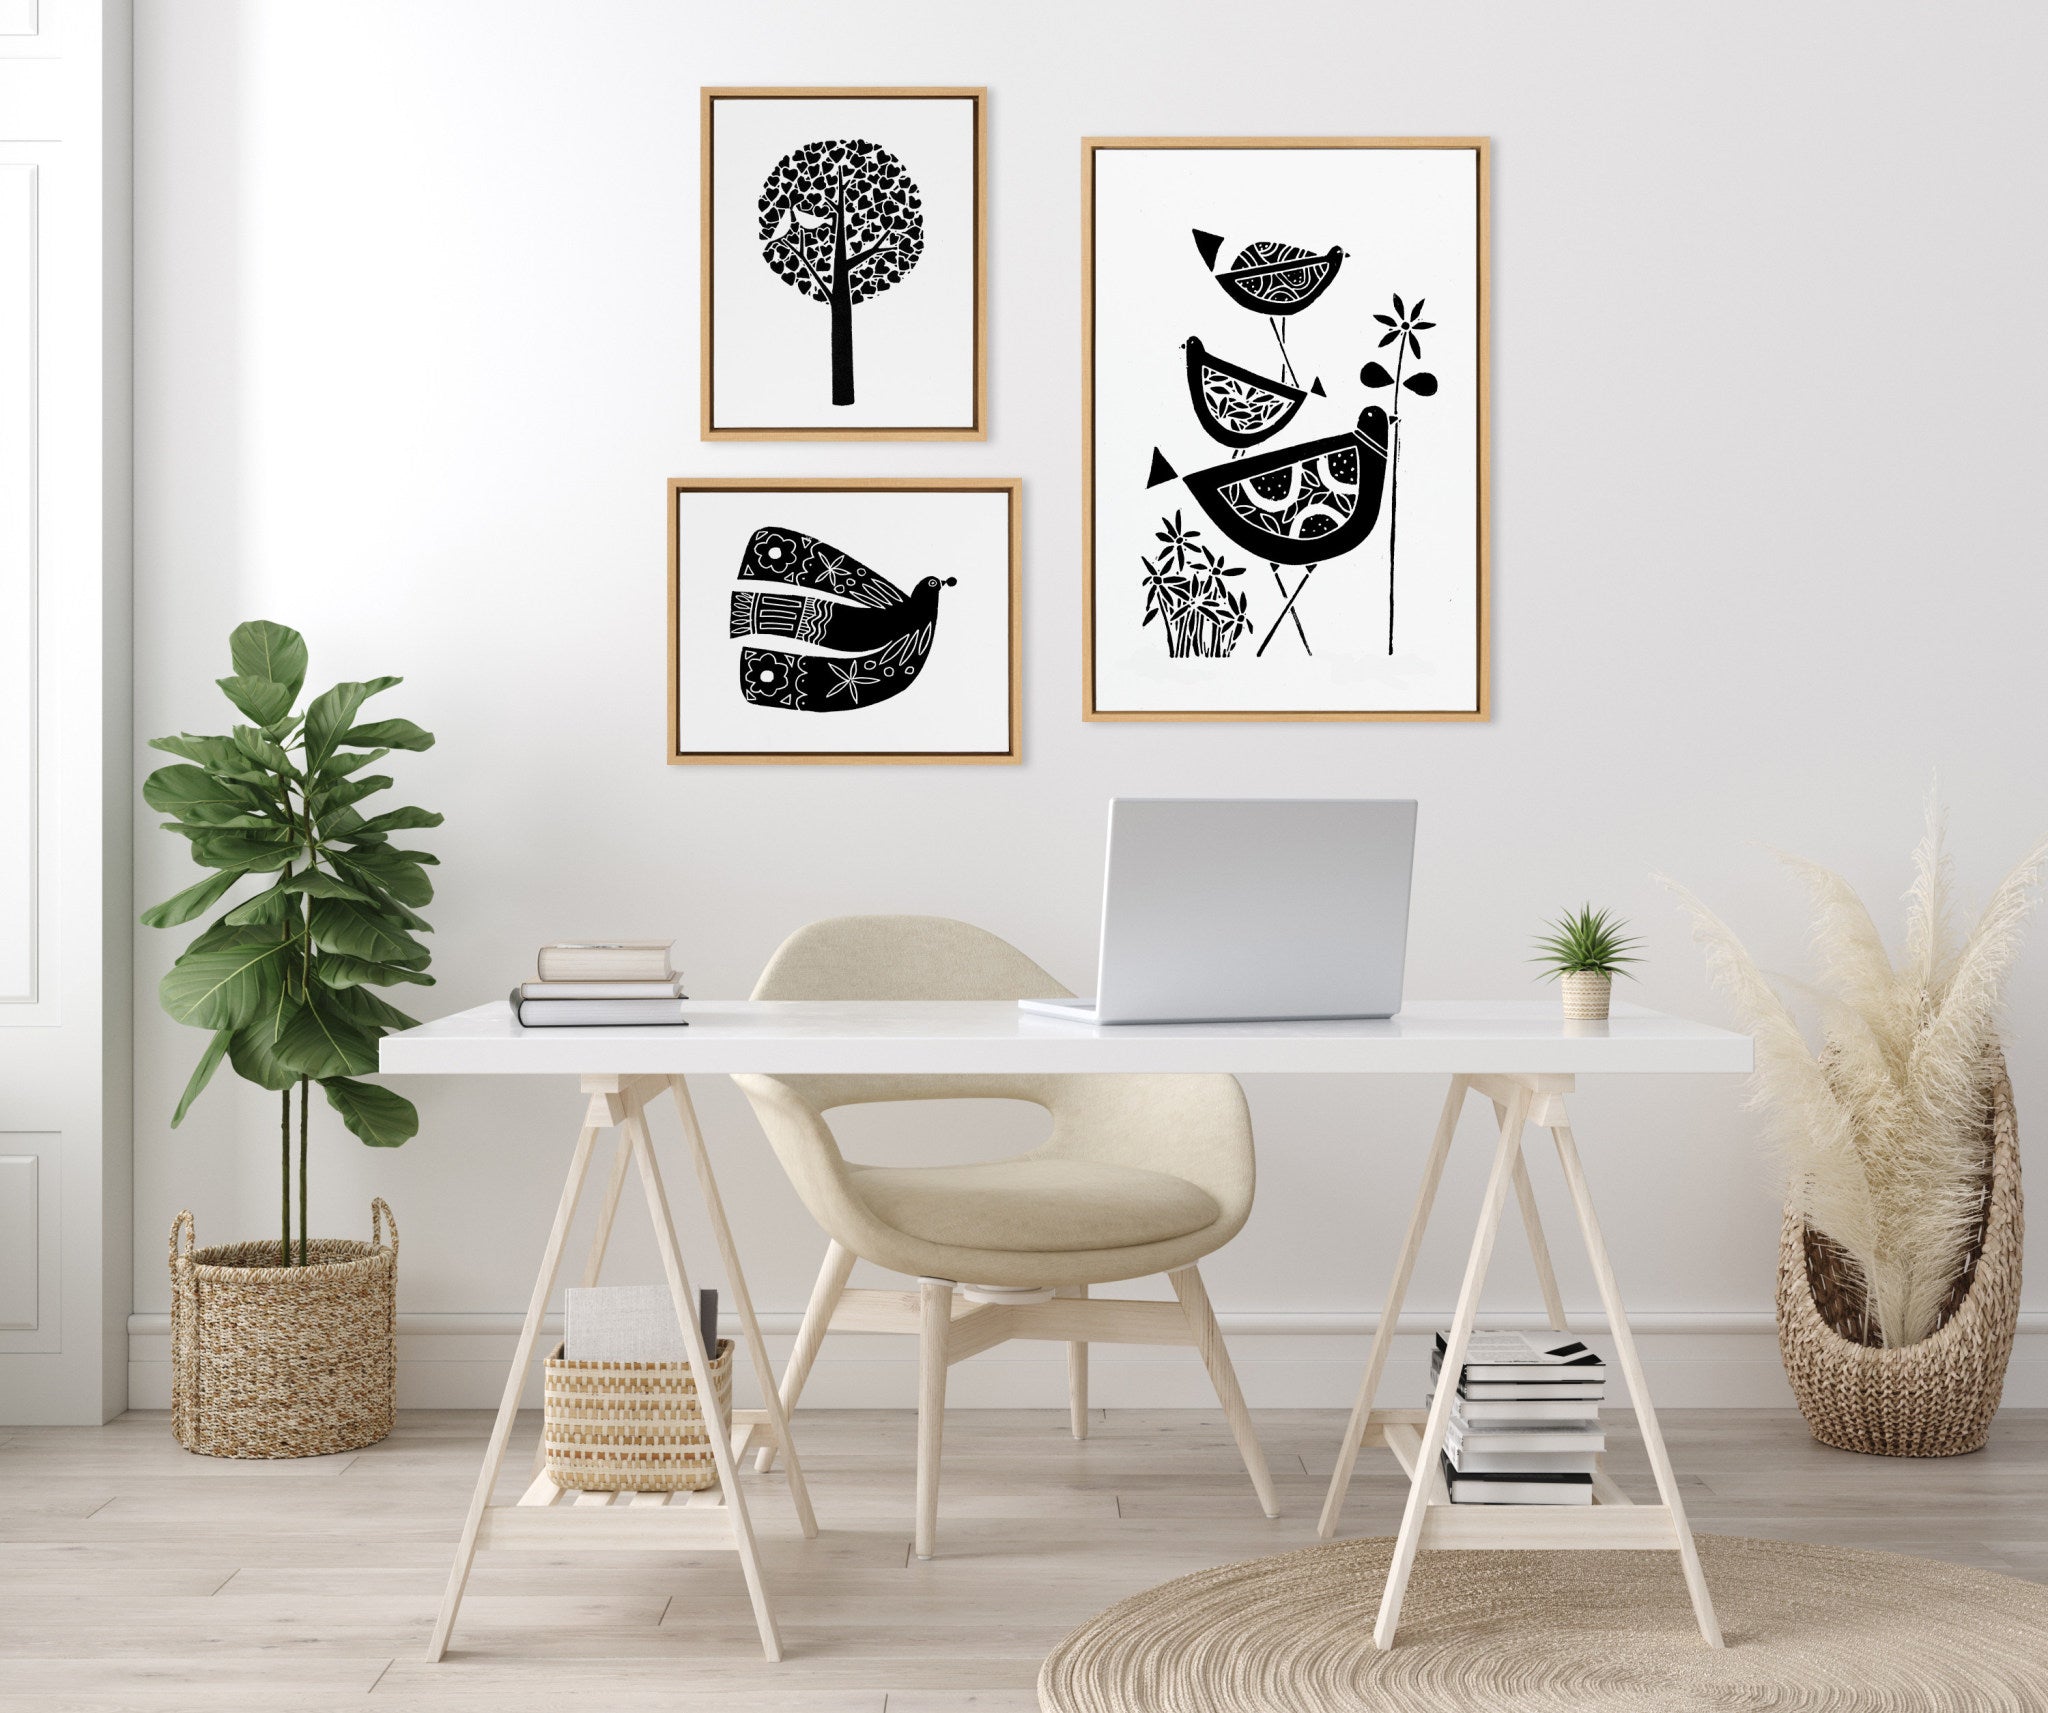 Sylvie Trio Linocut, Love Tree Linocut and Over the Cloud Linocut Framed Canvas Art Set by Giuliana Lazzerini